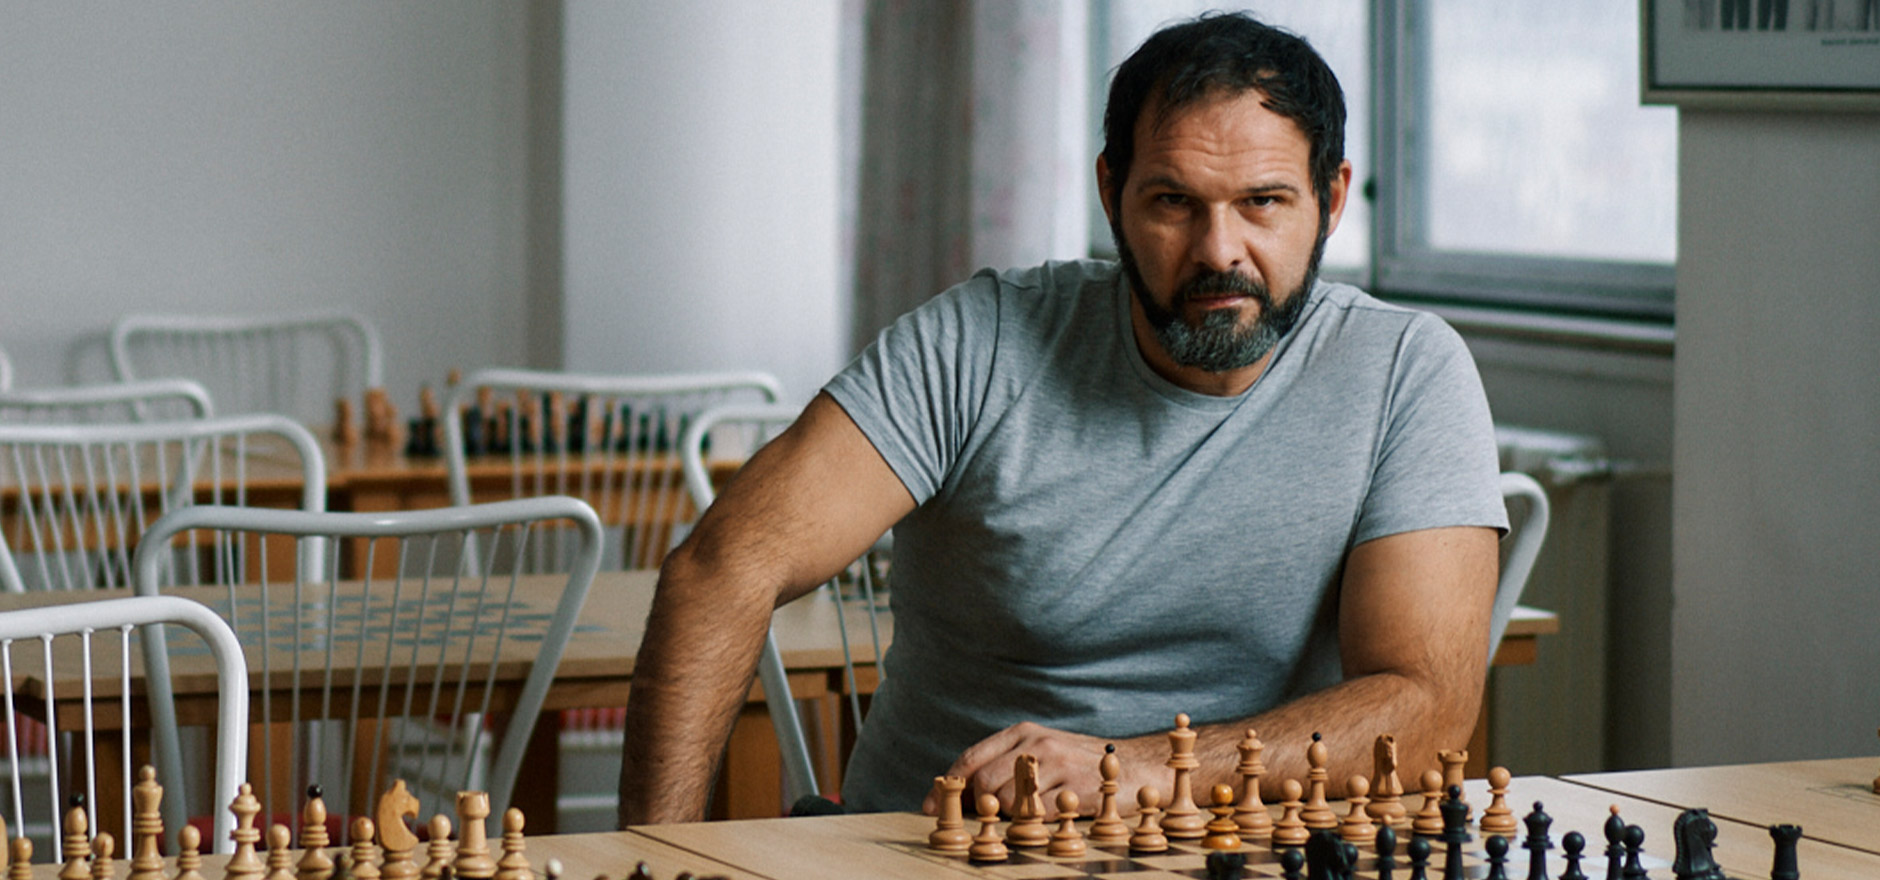 Aleksandar Sreckovic Kubura: Actor with a chess board